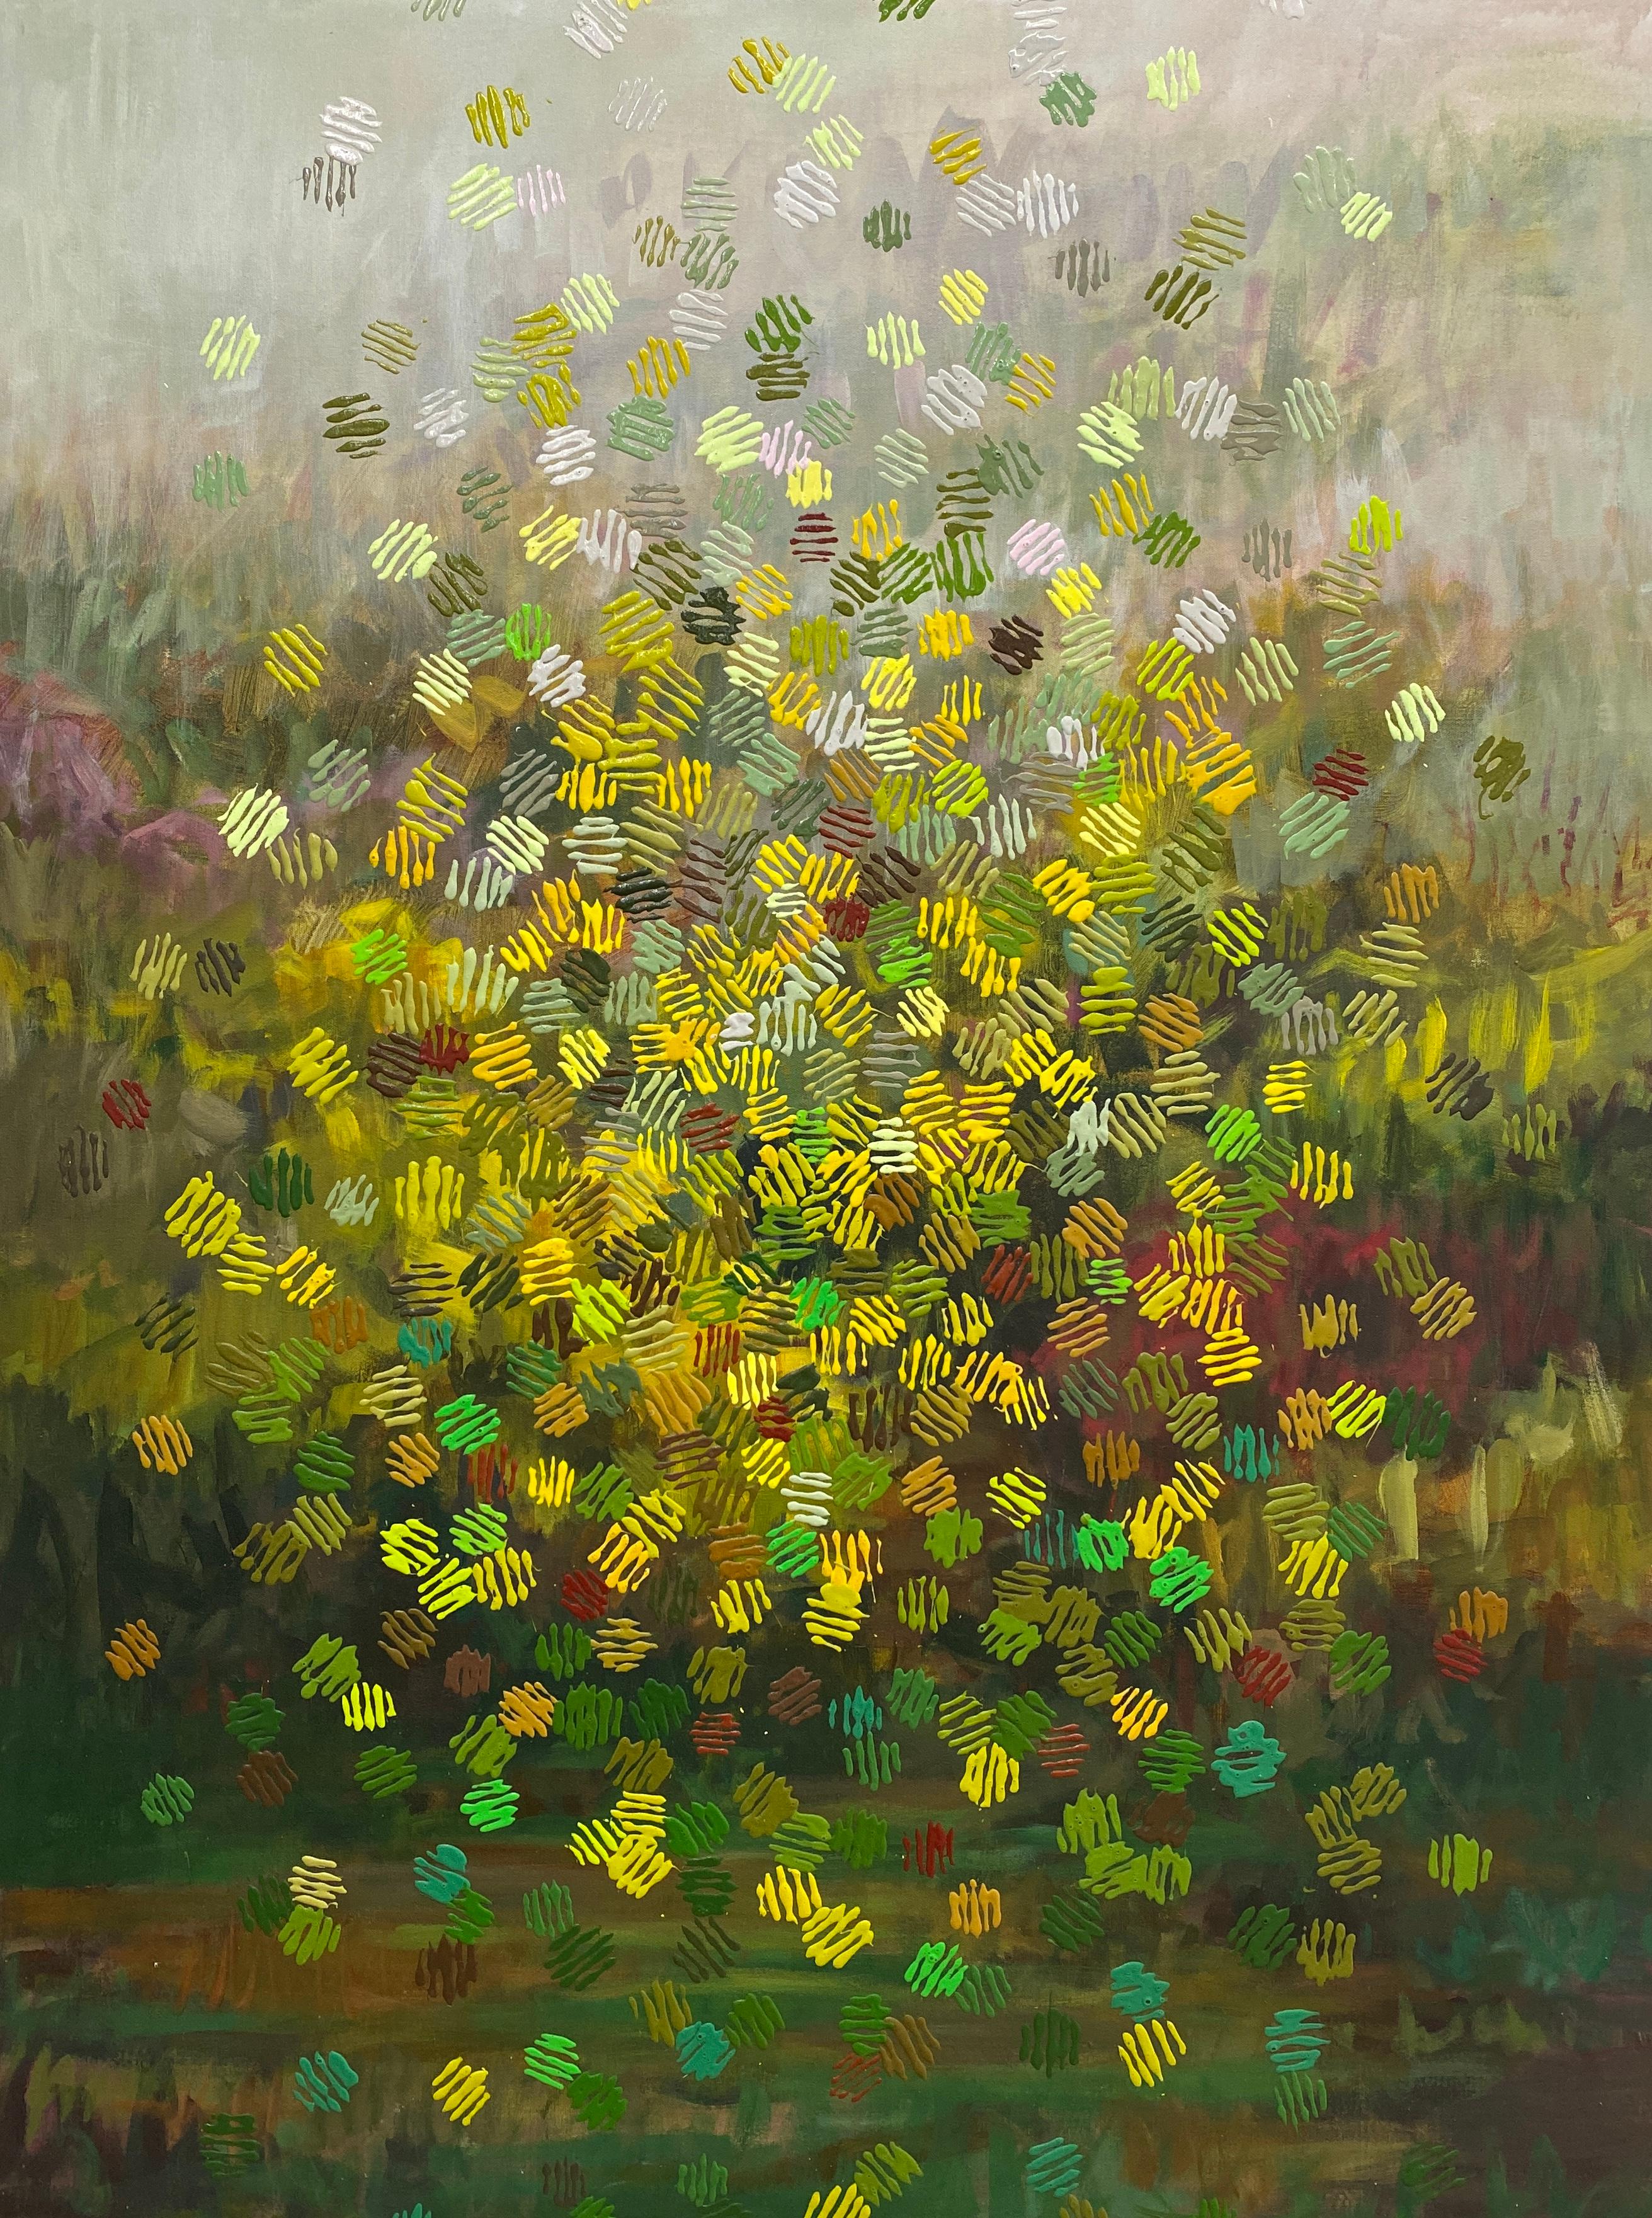 Amanda Joy Brown Landscape Painting - RAIN BOKEH - Large Acrylic on Canvas Painting of Landscape w/ Abstract Shapes